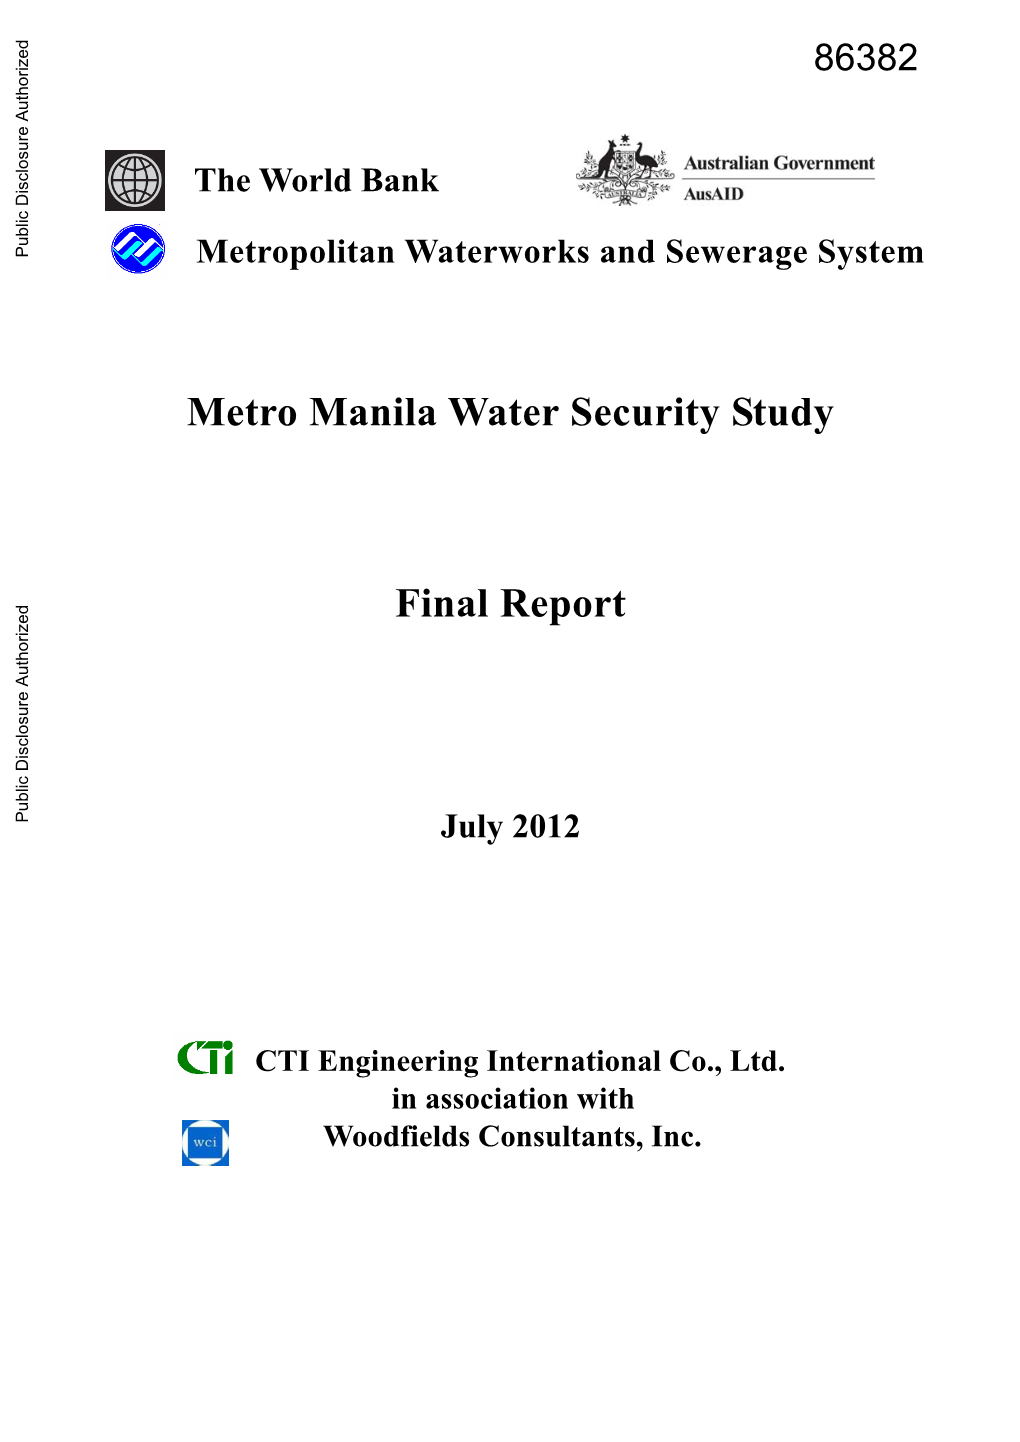 Metropolitan Waterworks and Sewerage System